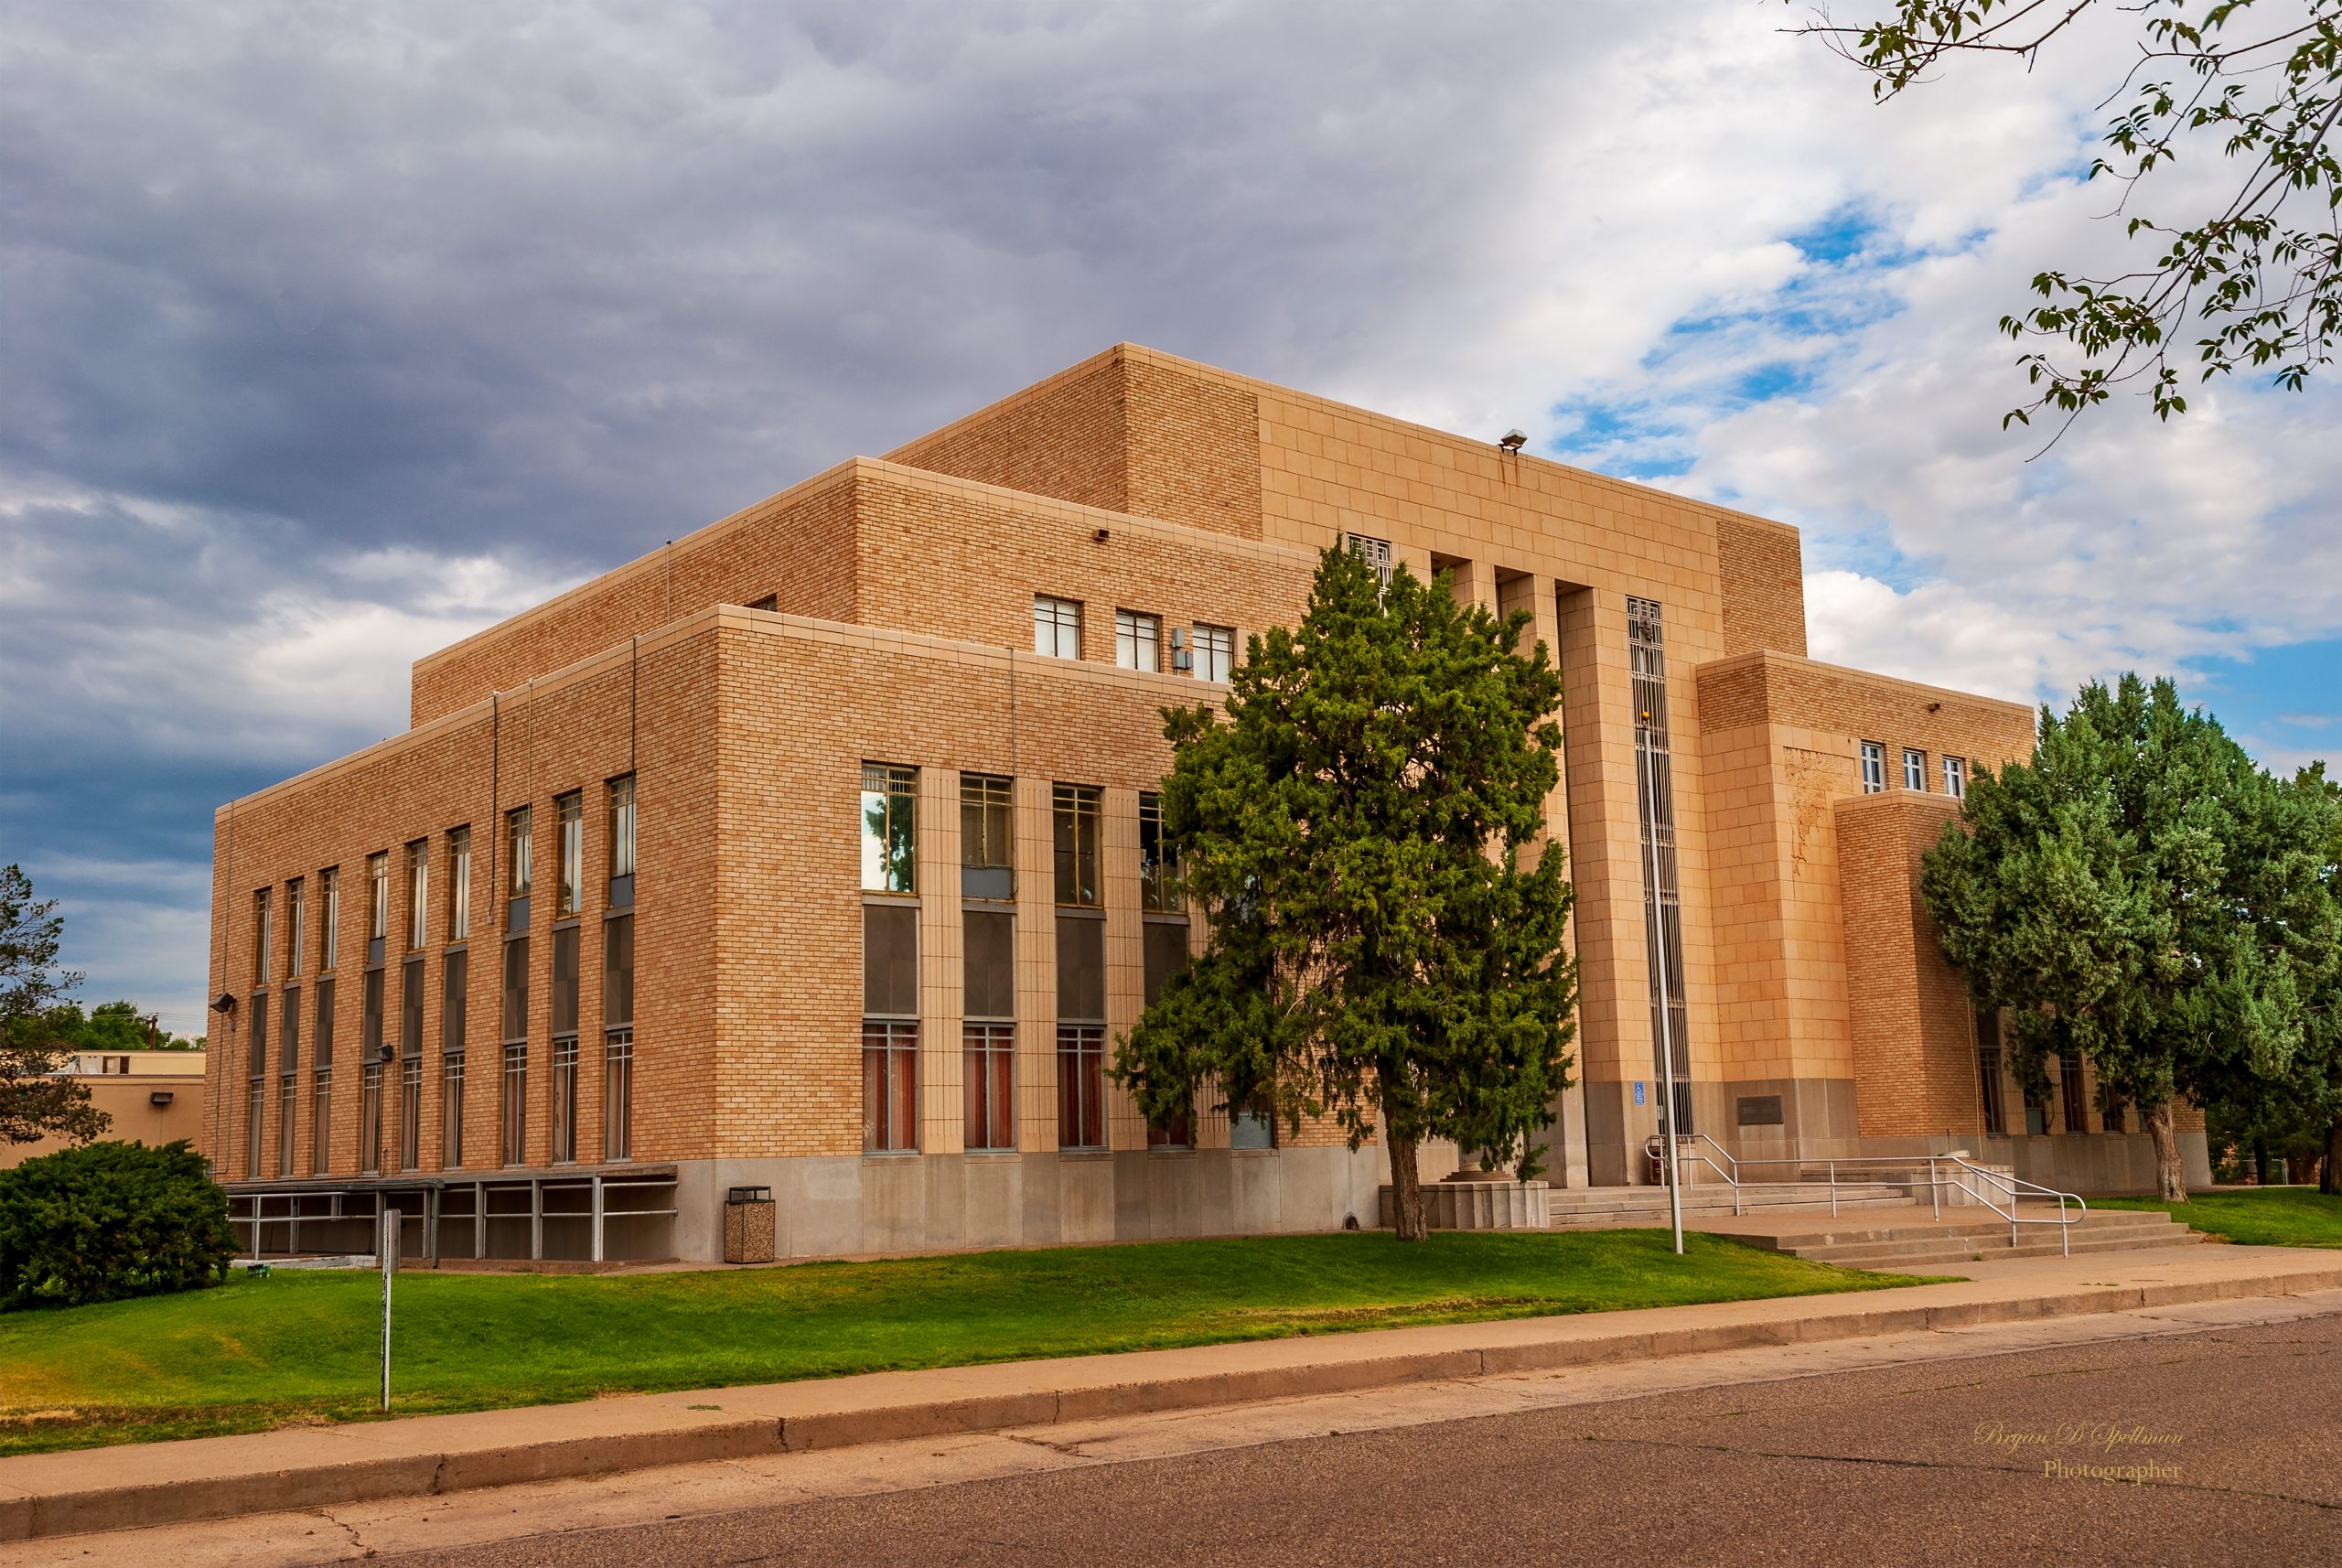 Quay County Court House, Tucumcari, New Mexico